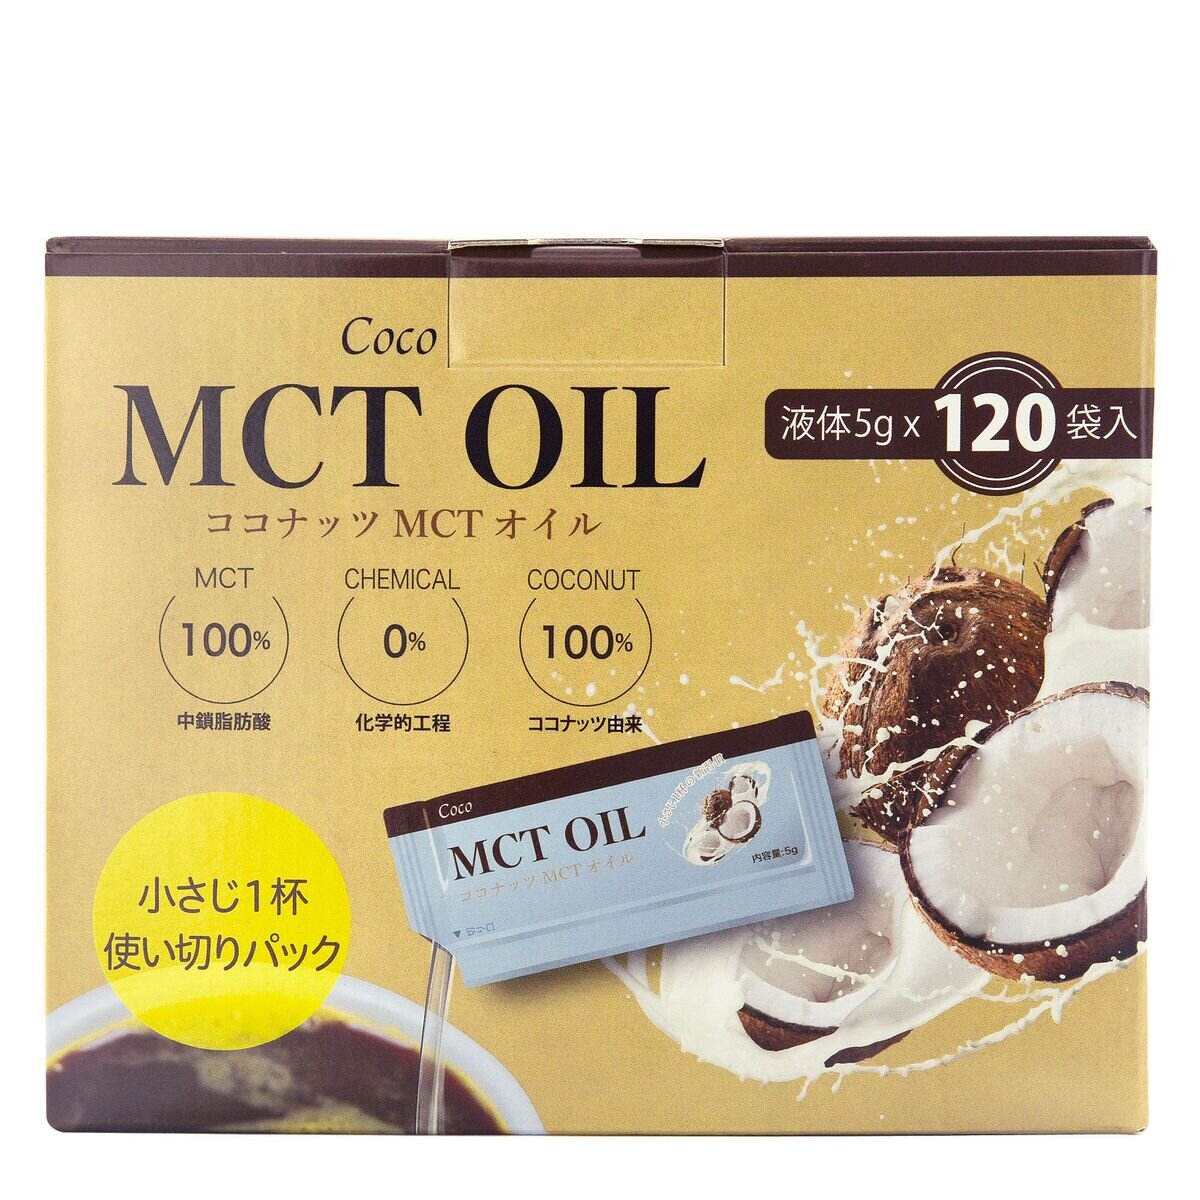 Coco MCT オイル 5g X 120 包 Costco Japan